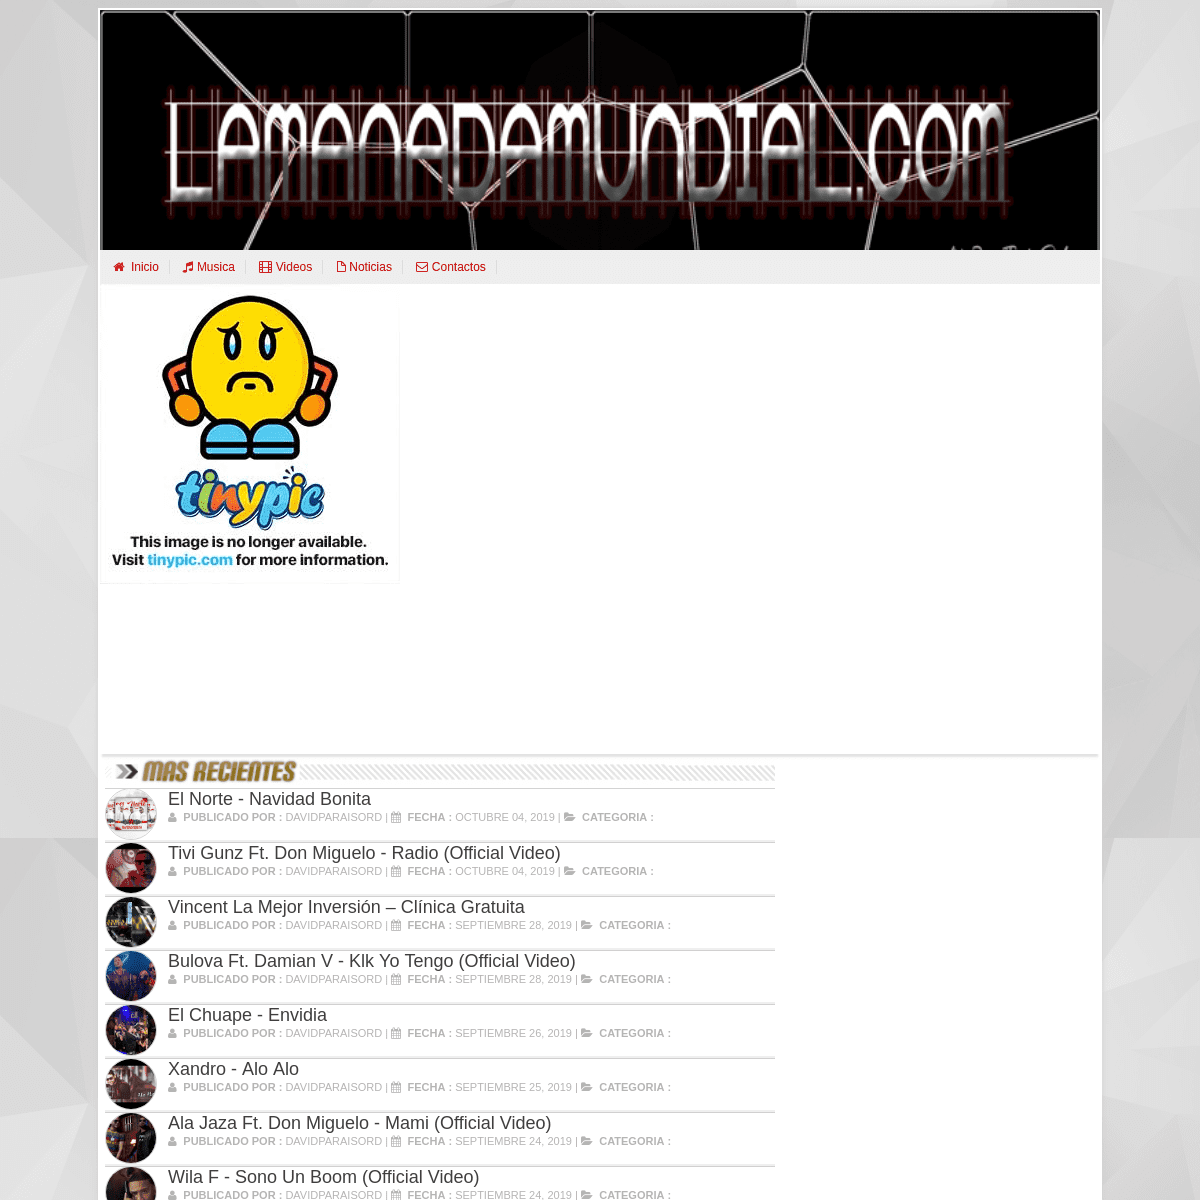 A complete backup of lamanadamundial.com